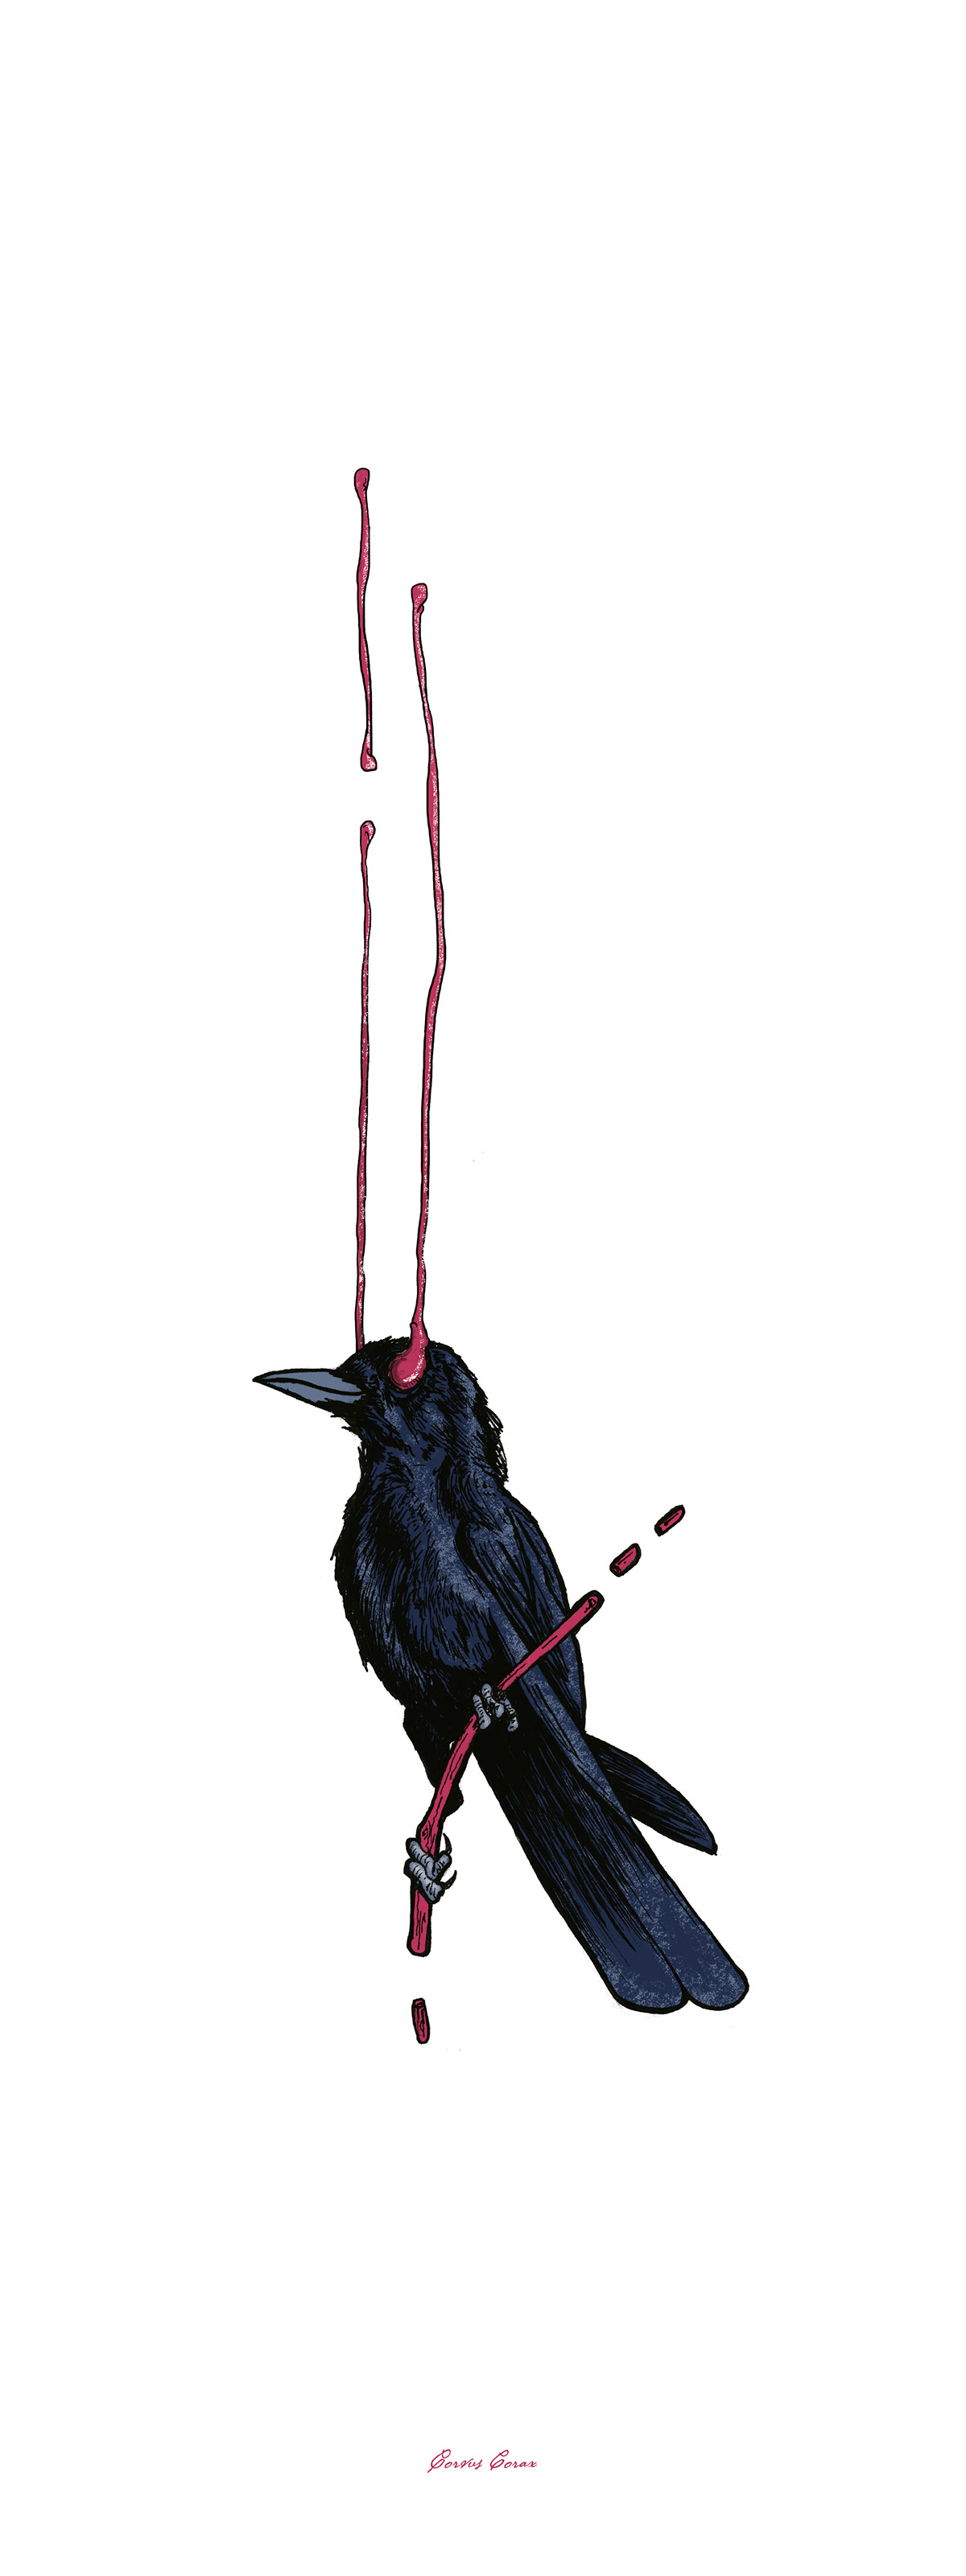 birds Cardenal cardinal crow blujay owl silkscreen parasite symbiotic edition Serie pajaro cuervo buho cardinalis